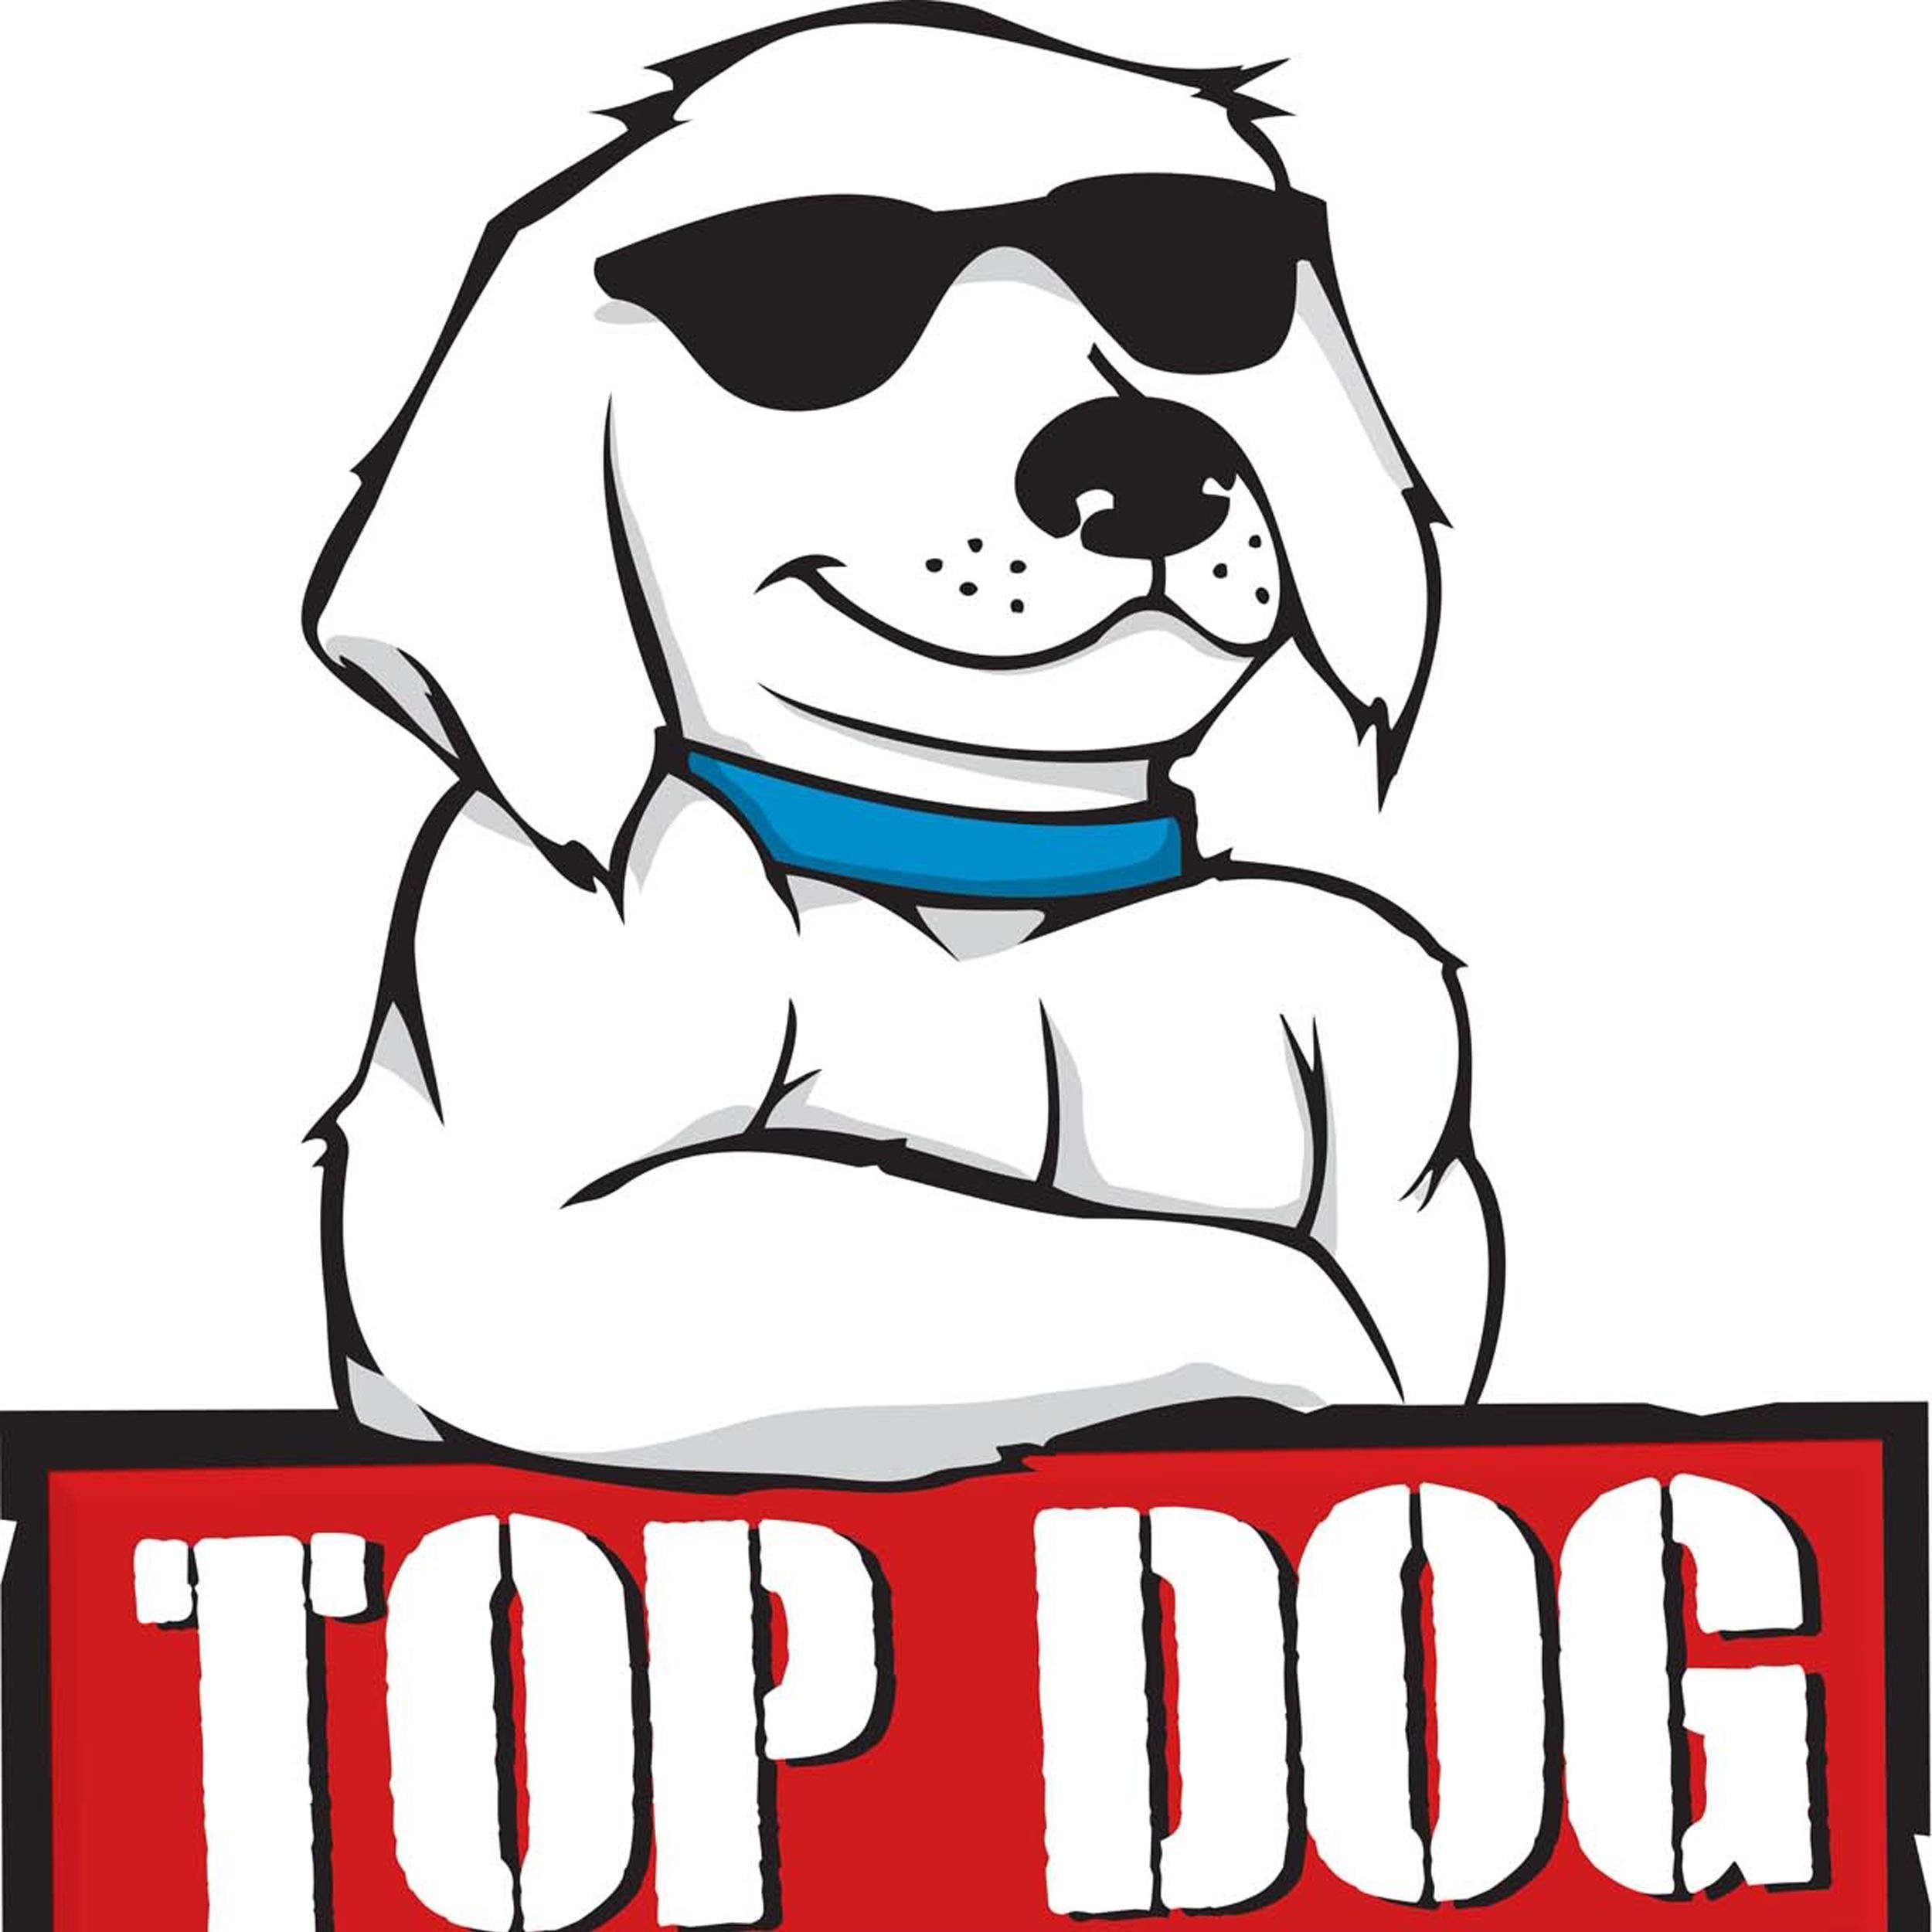 Аватарки дог. Top Dog логотип. Топ дог для собак. Лого надпись топ дог. Топ дог промоушен.